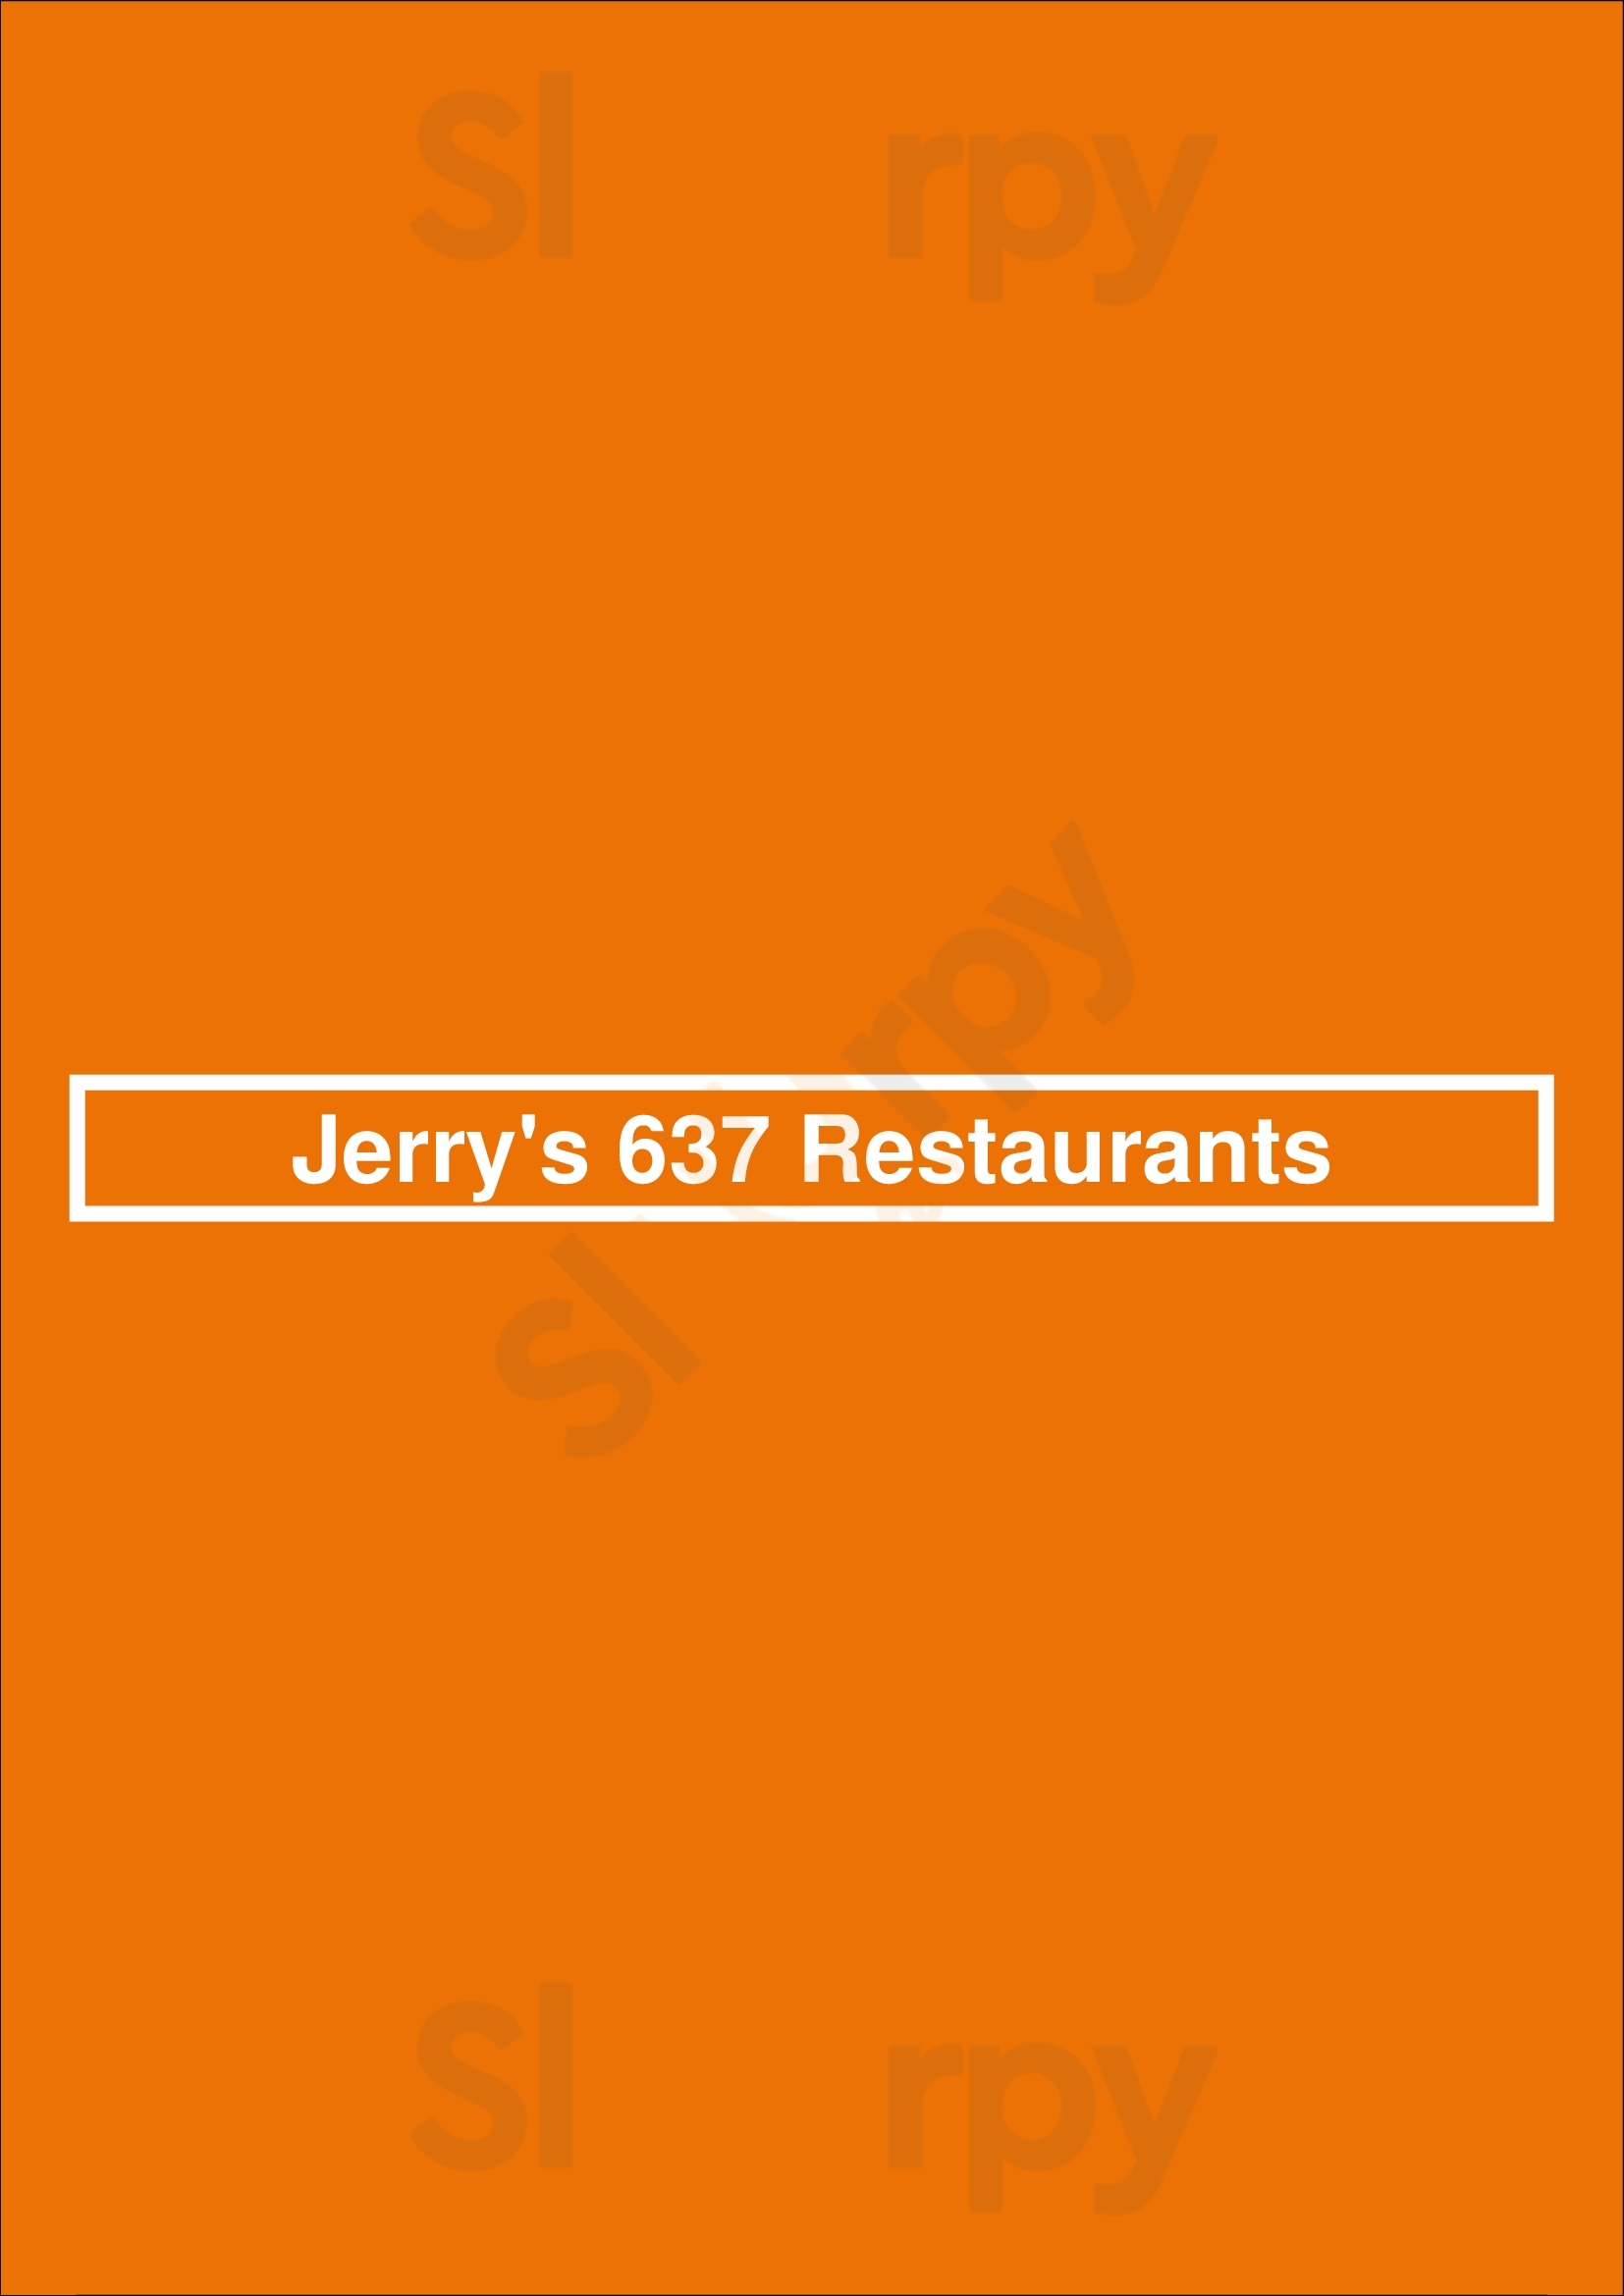 Jerry's 637 Restaurants Staten Island Menu - 1